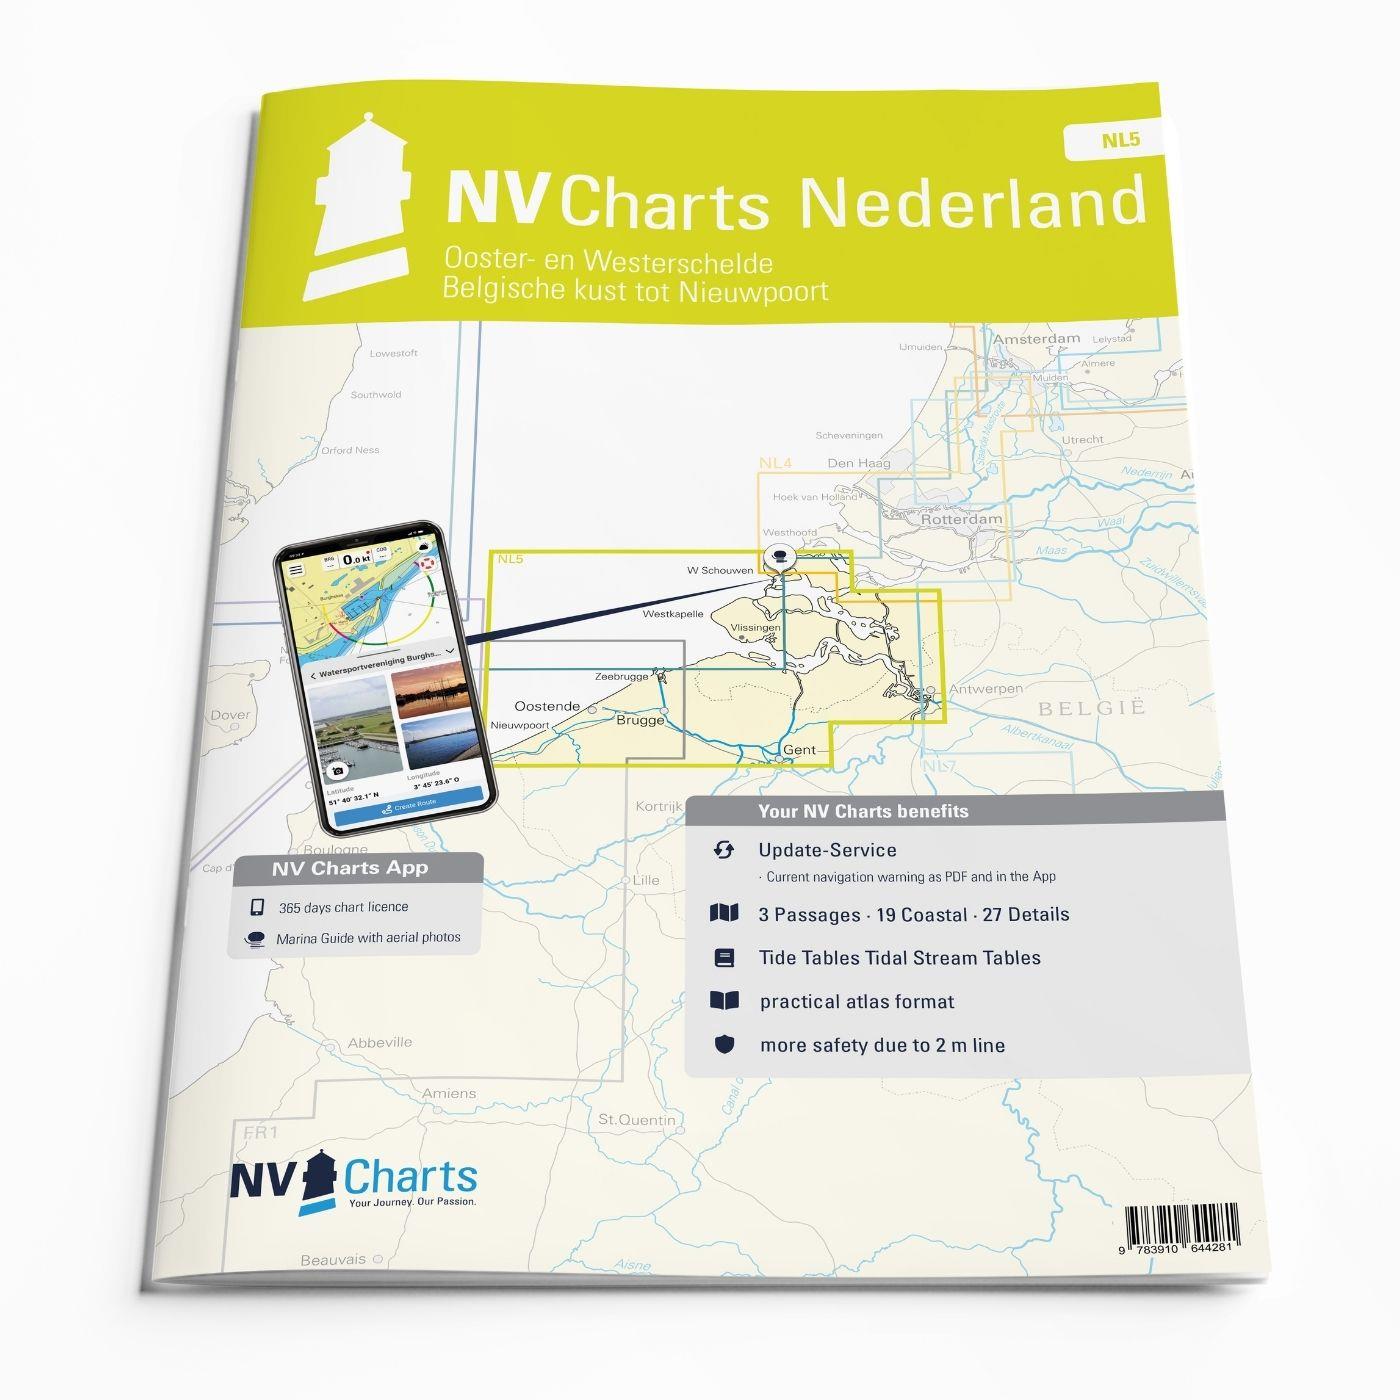 NV Charts Nederland NL5 - Ooster & Westerschelde